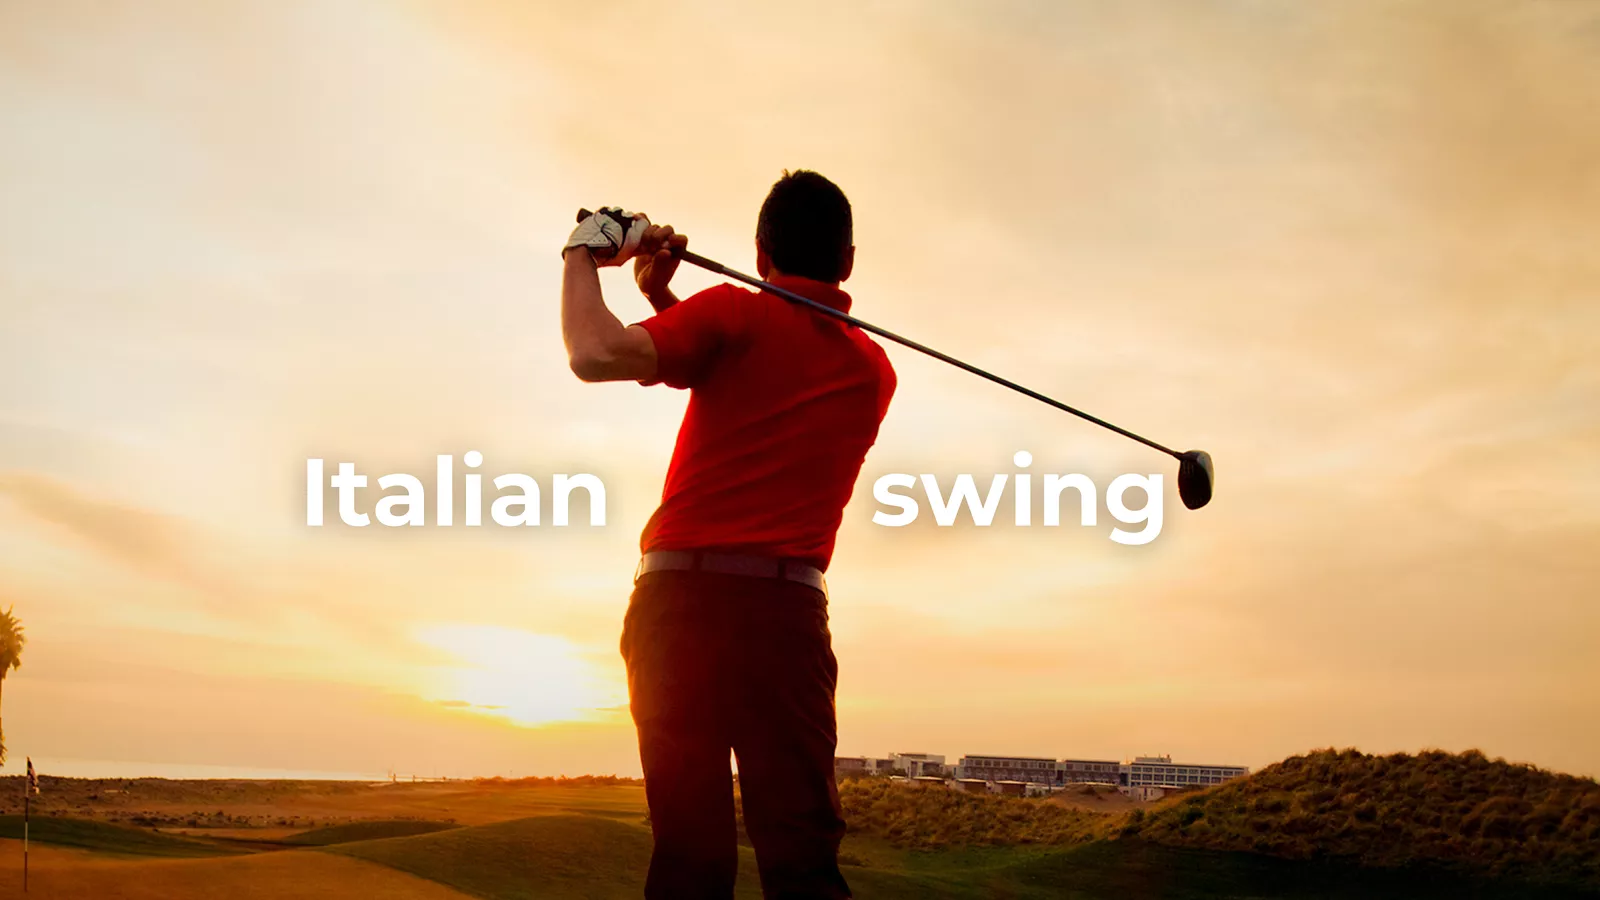 IGTM: International Golf Travel Market 2022 in Rome